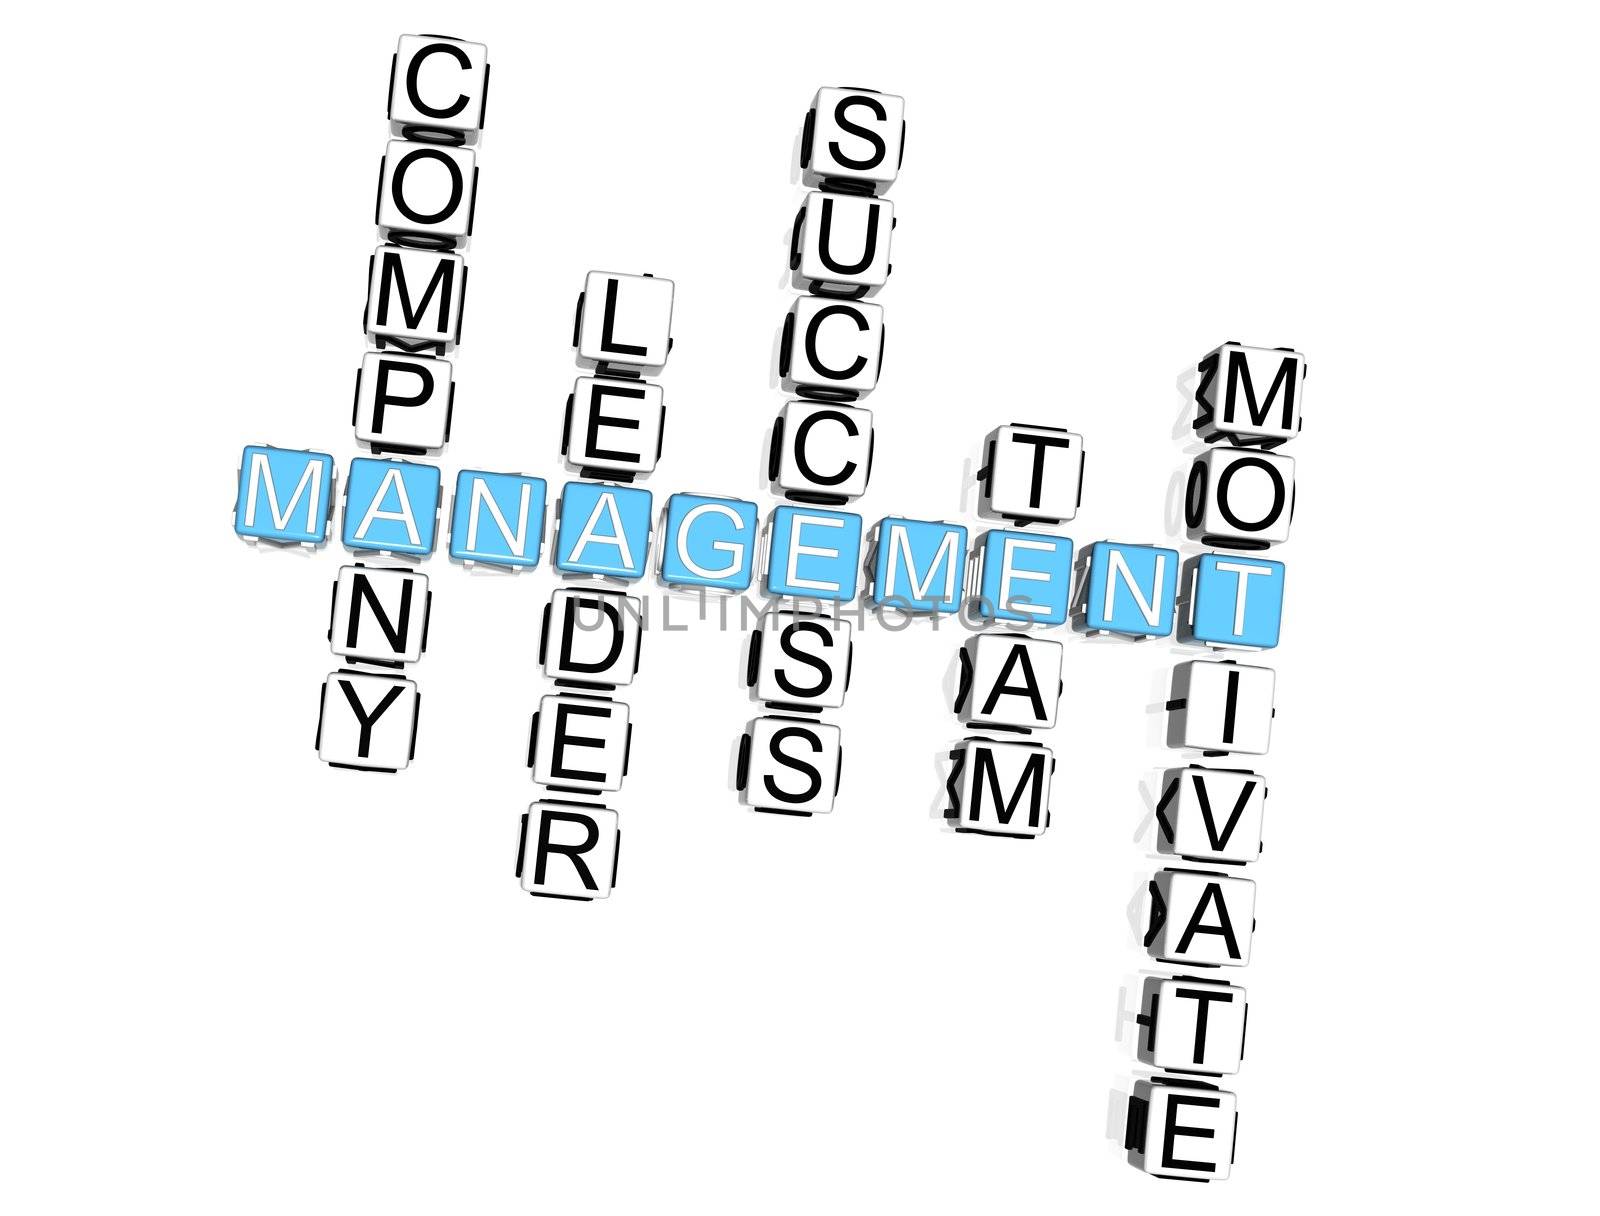 3D Management Crossword on white background